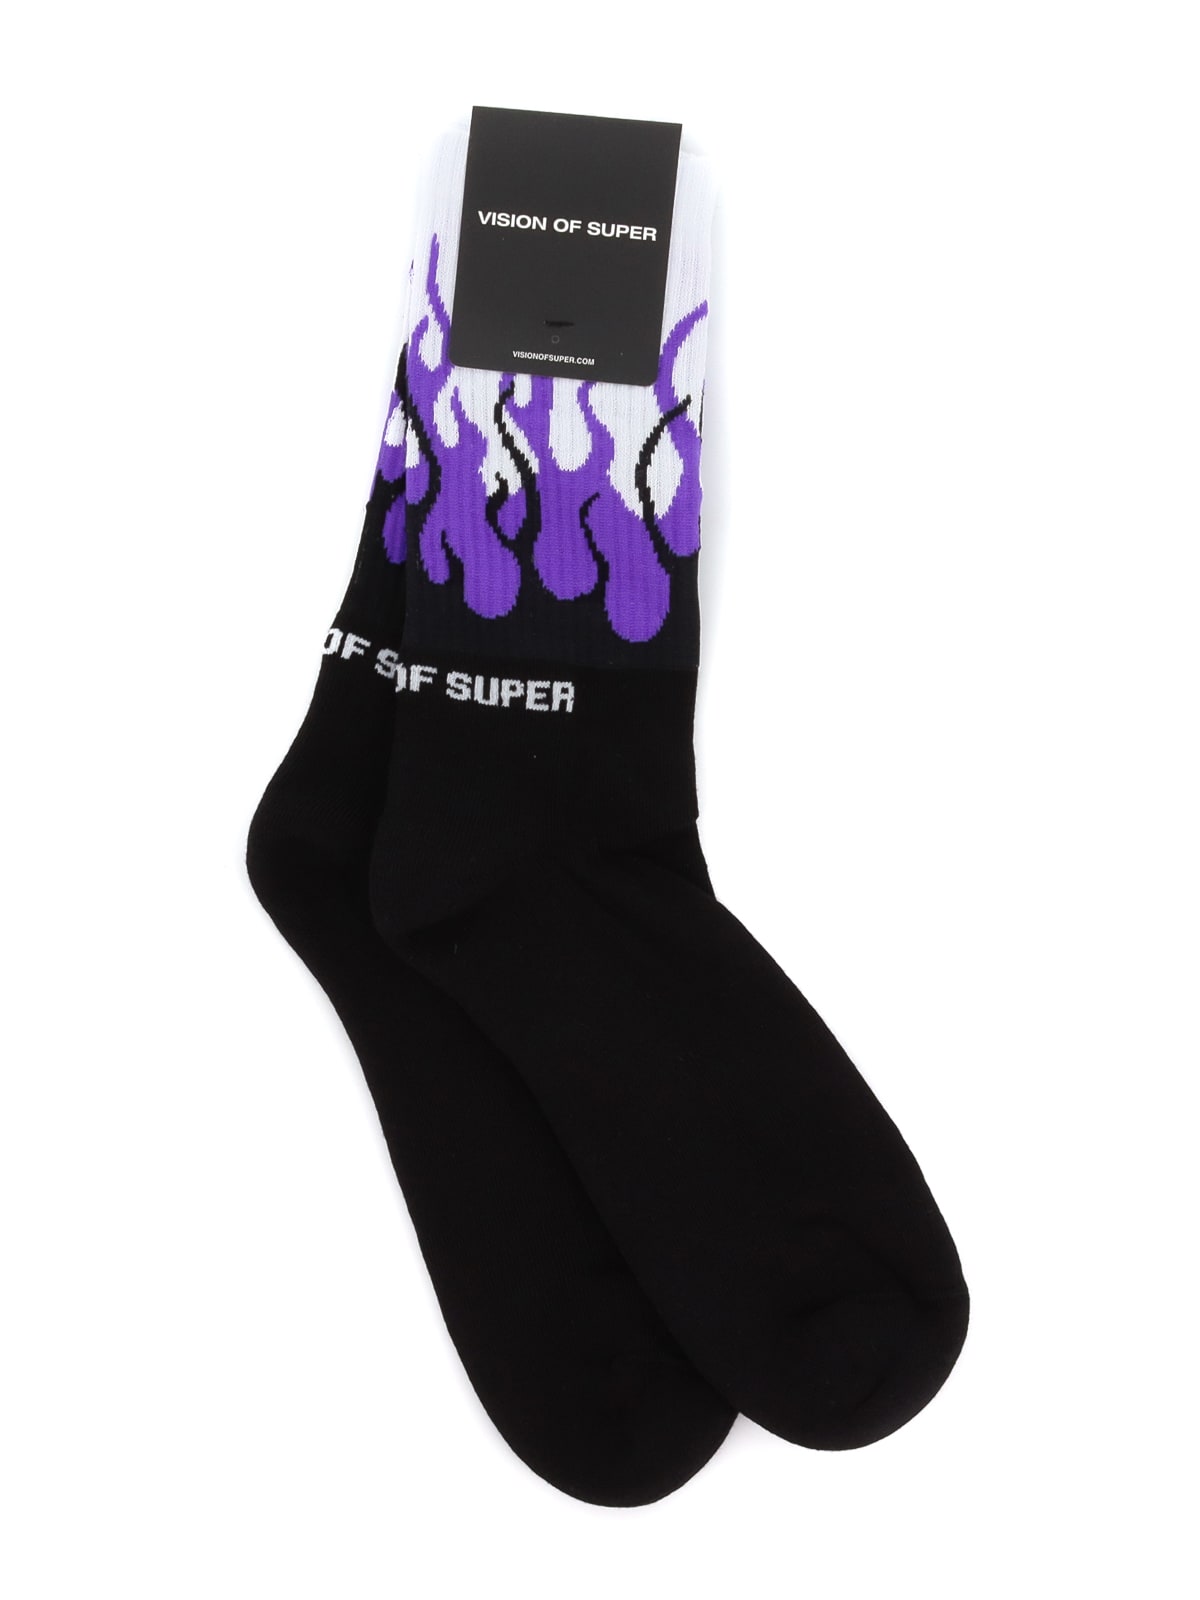 Flaming black socks